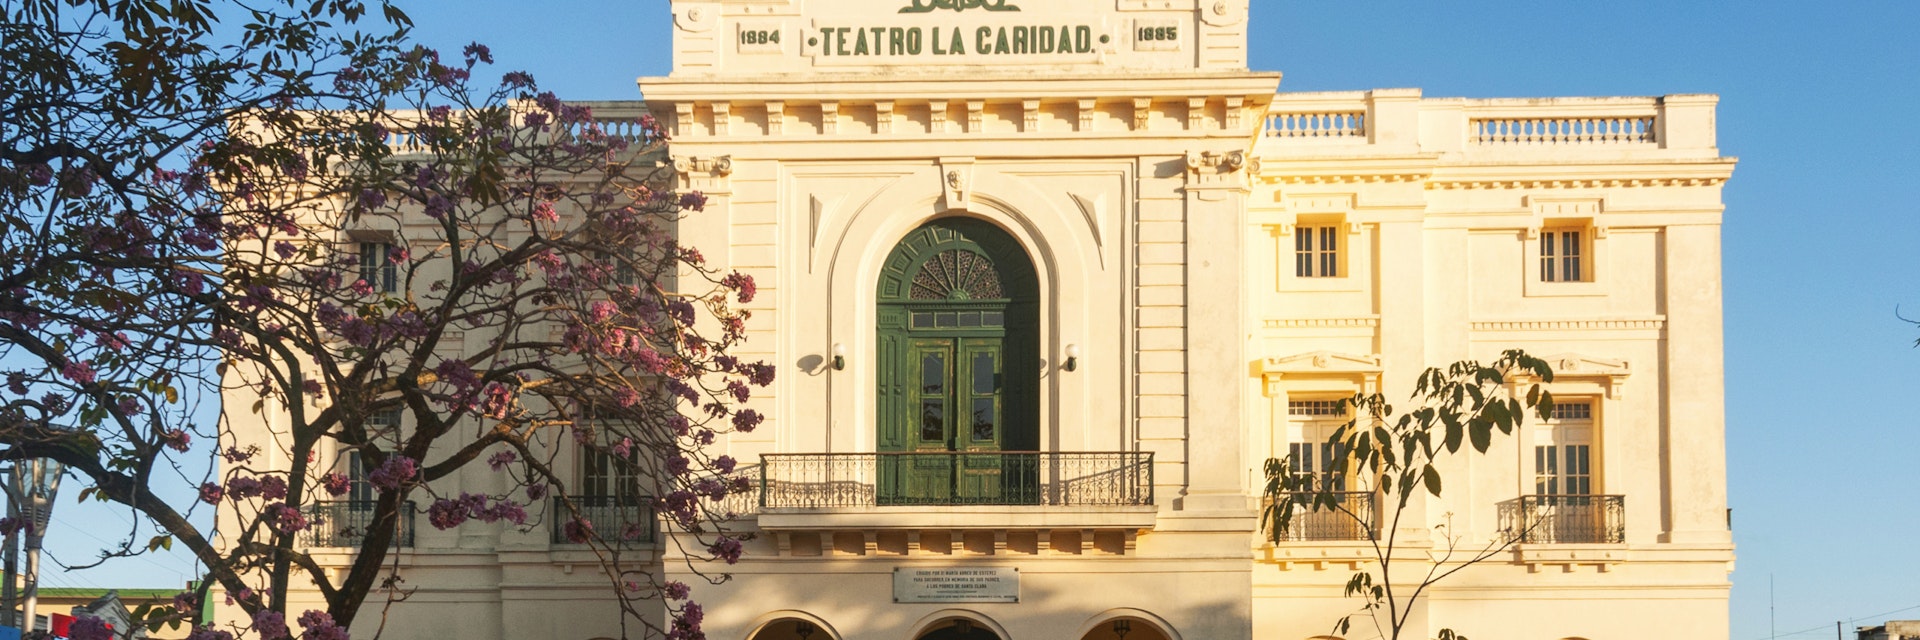 Elk224-3745 Cuba, Santa Clara, Parque Vidal, Teatro la Caridad Theater